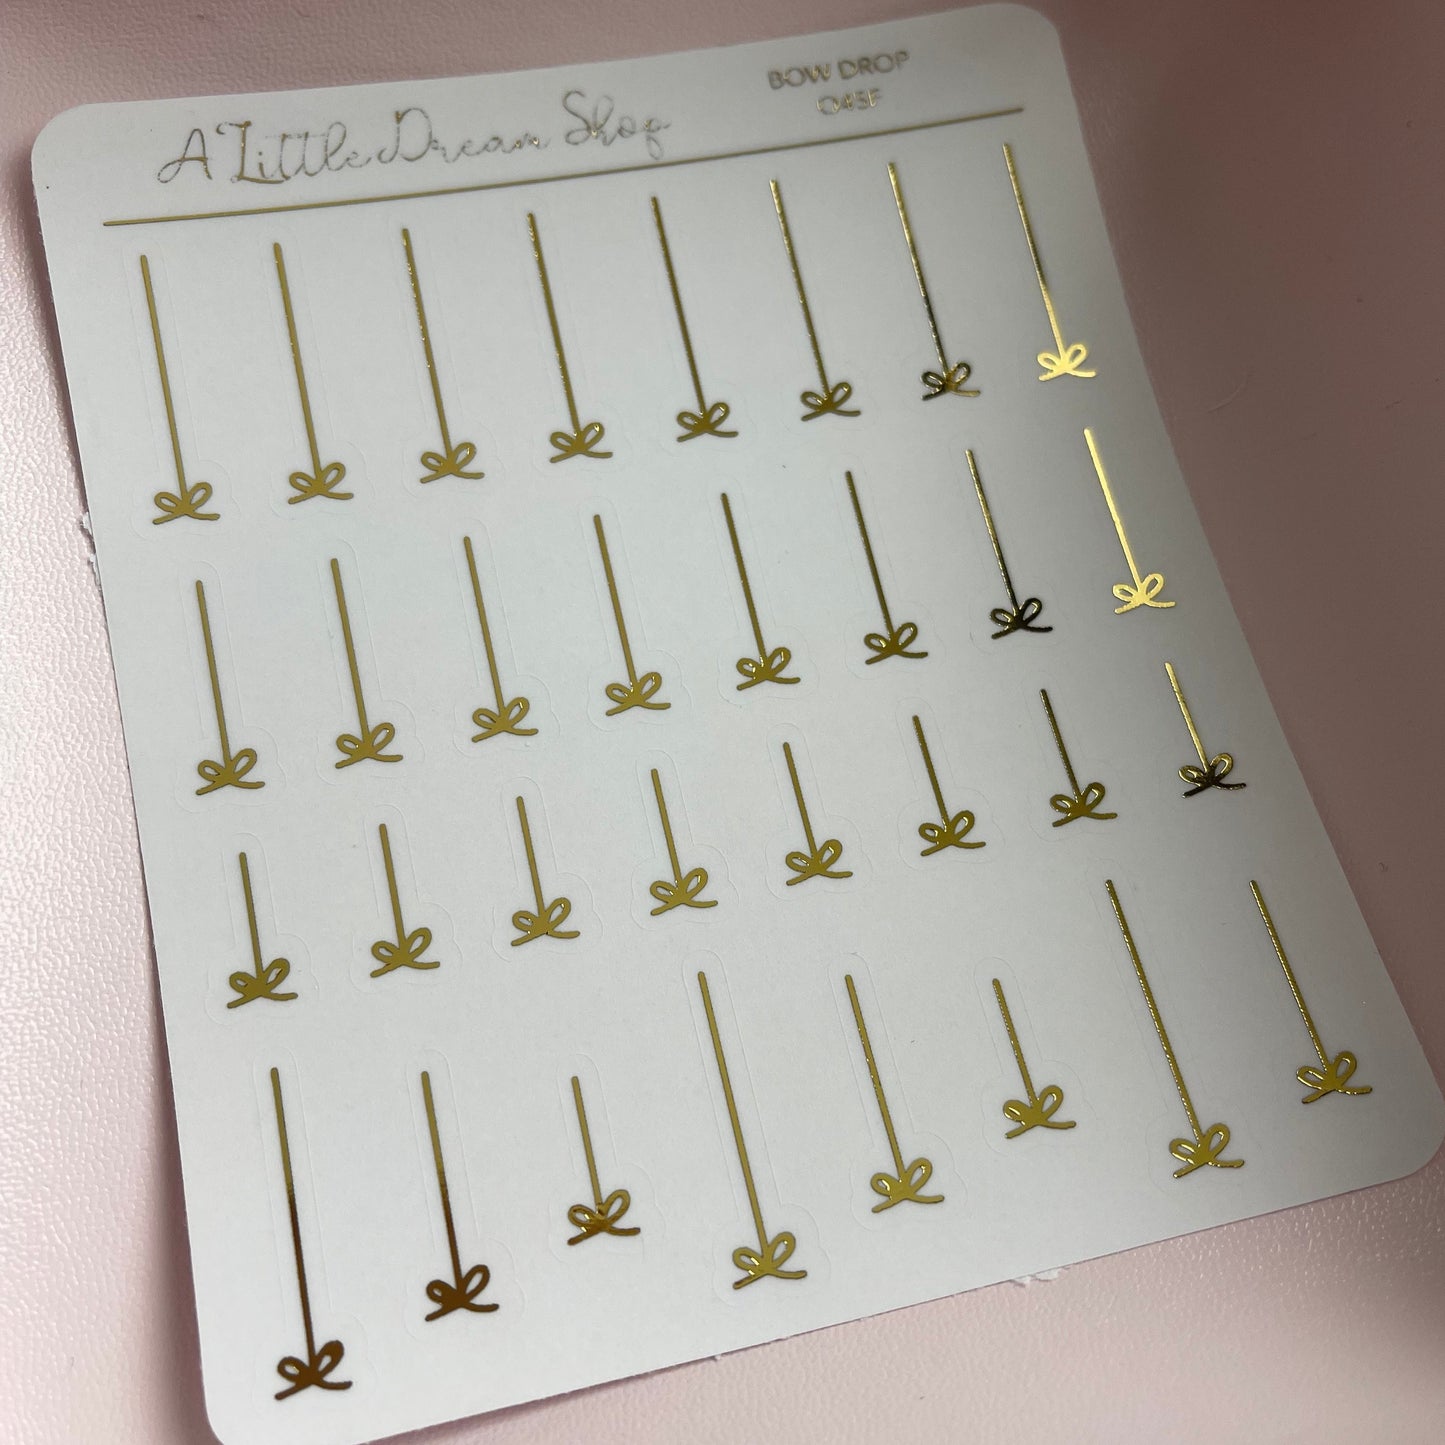 Bow Drop - Stickers Sheet - Foil